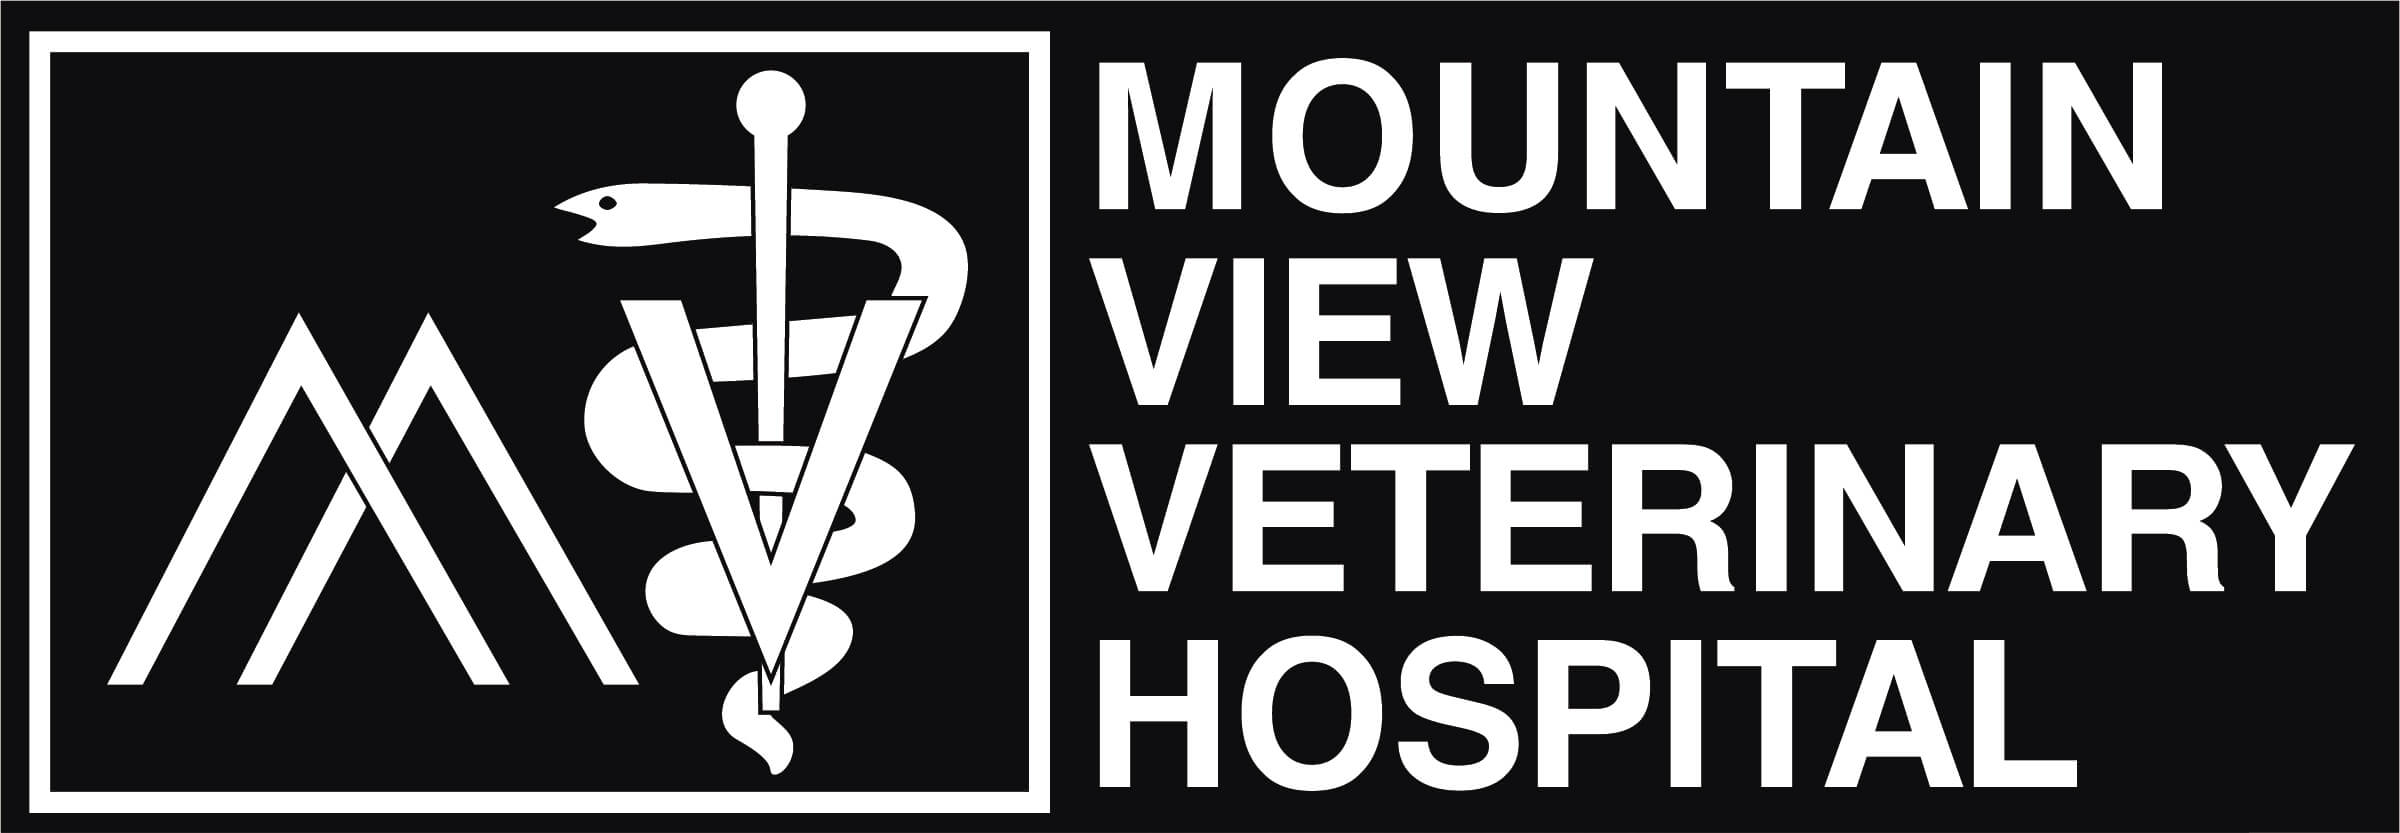 Mountain View Animal Hospital